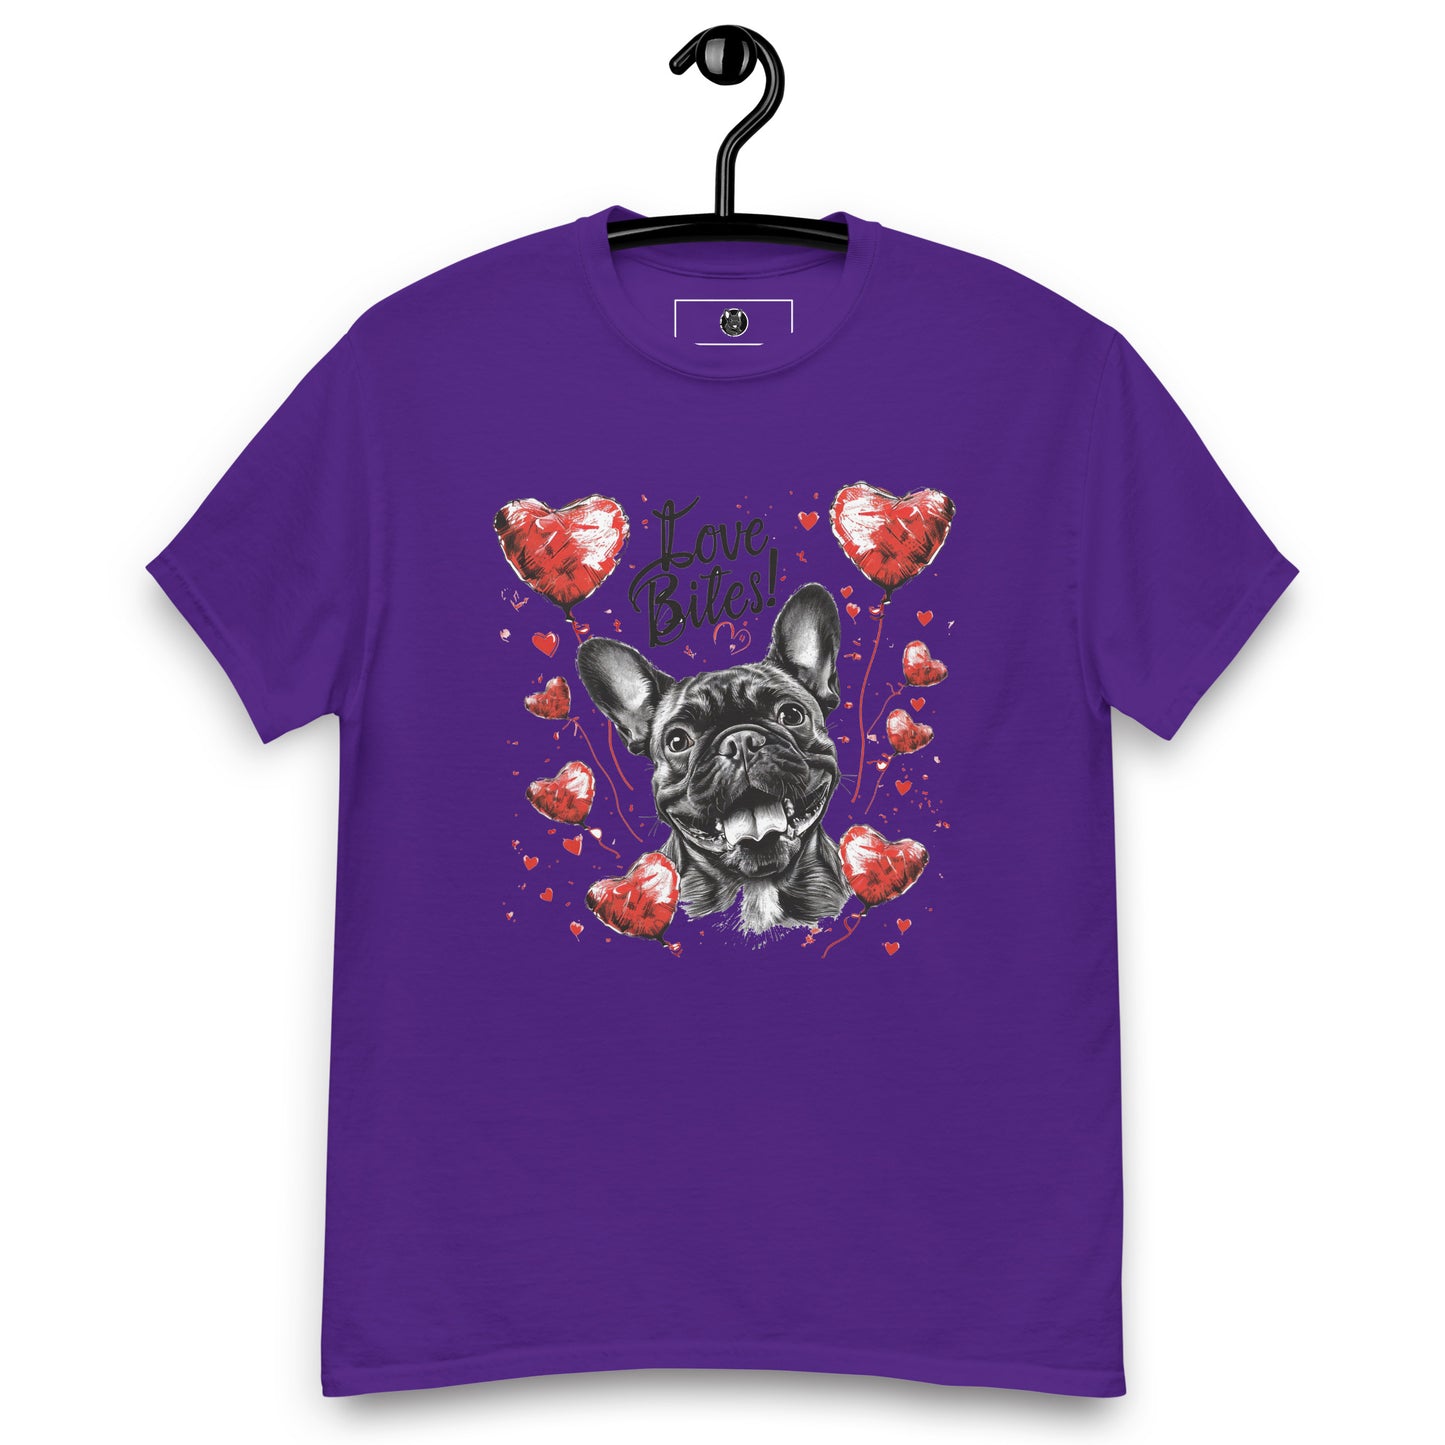 "Love Bites!" Frenchie - Unisex T-Shirt